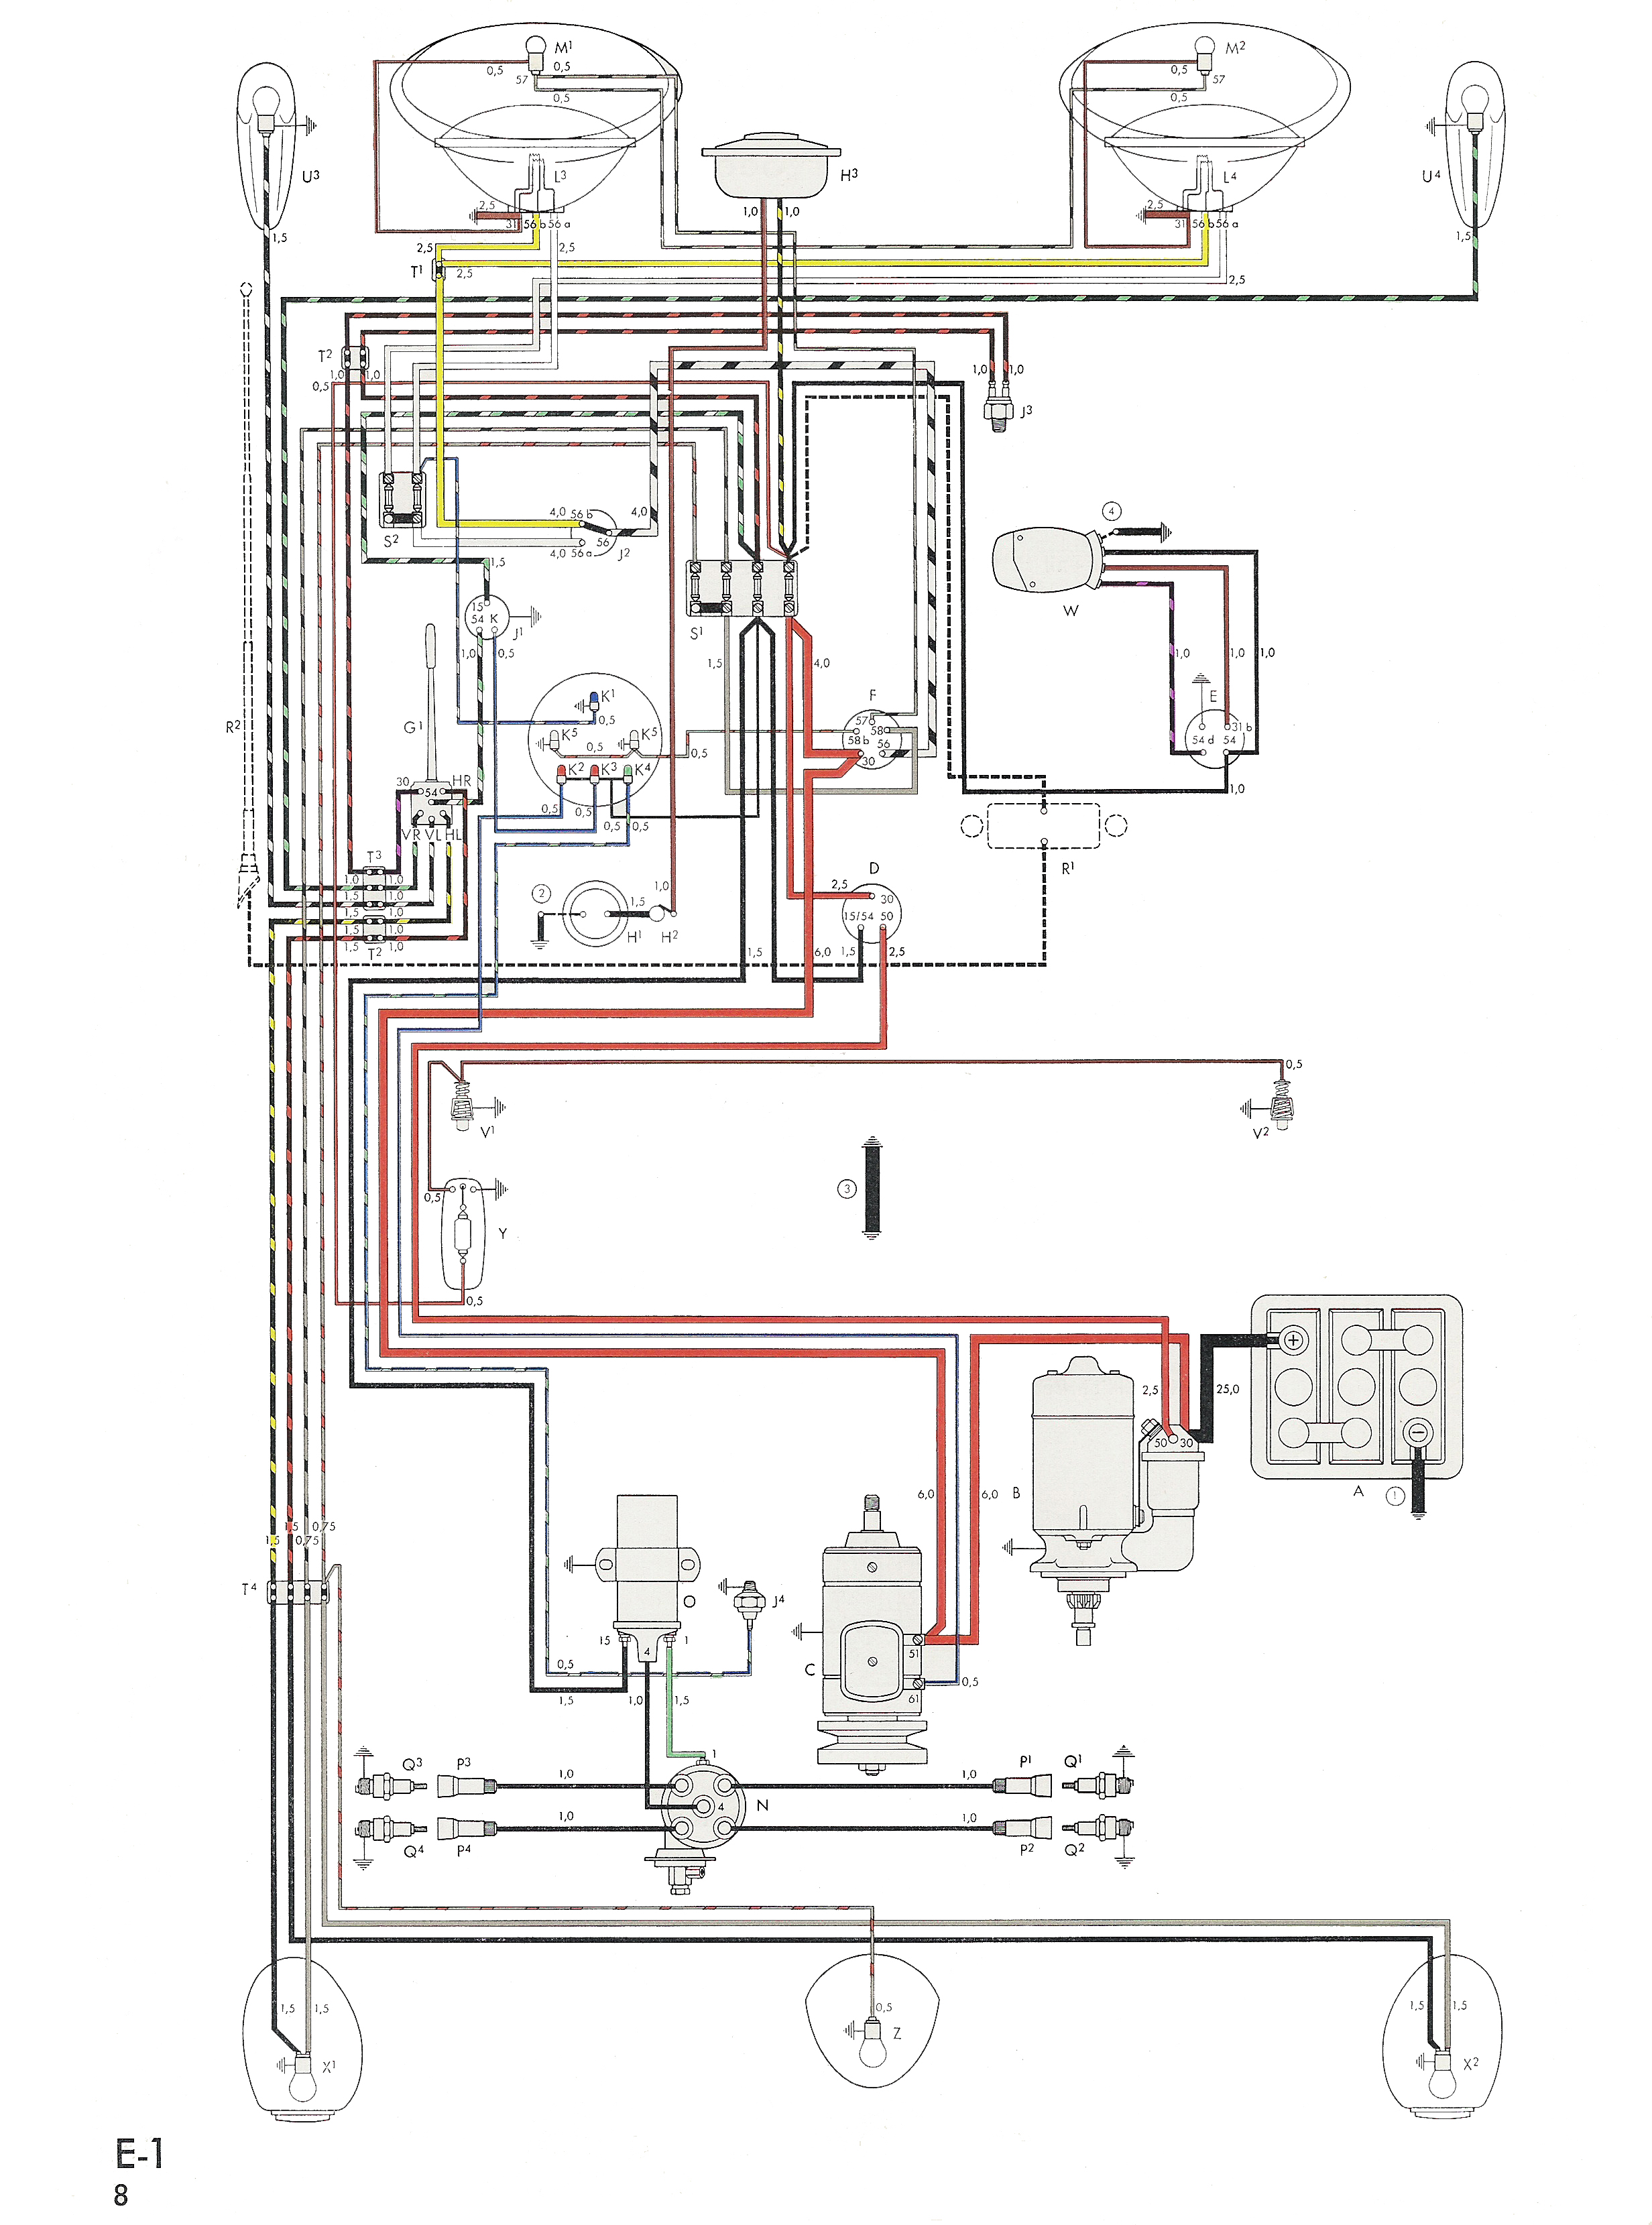 [DIAGRAM] 6 Volt To 12 Conversion Wiring Diagram Jeep Cj3a